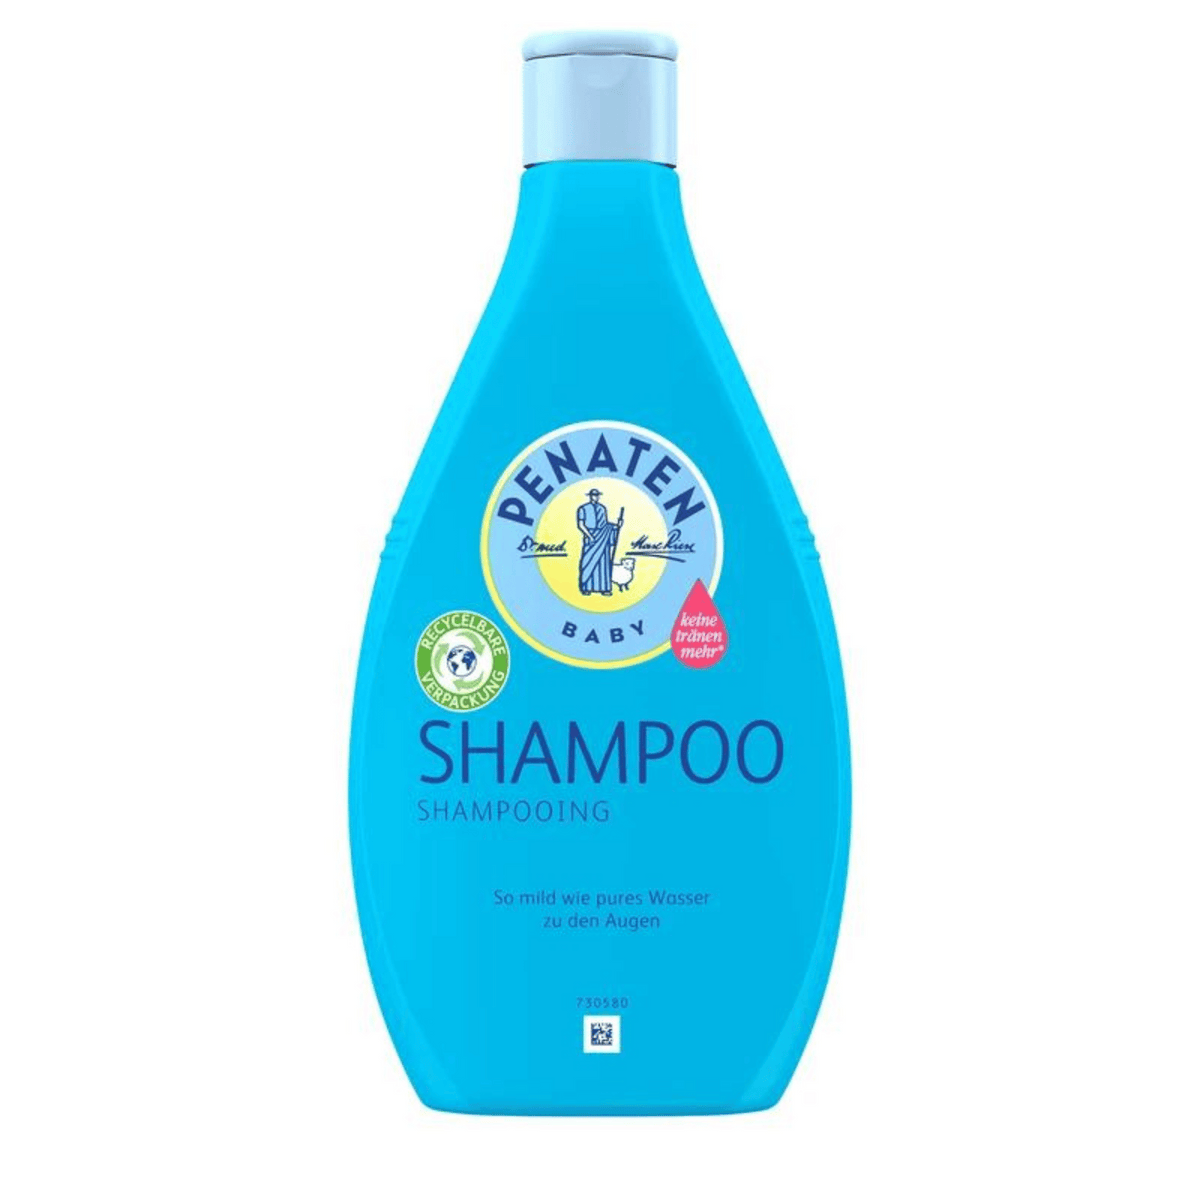 Primary Image of Shampoo